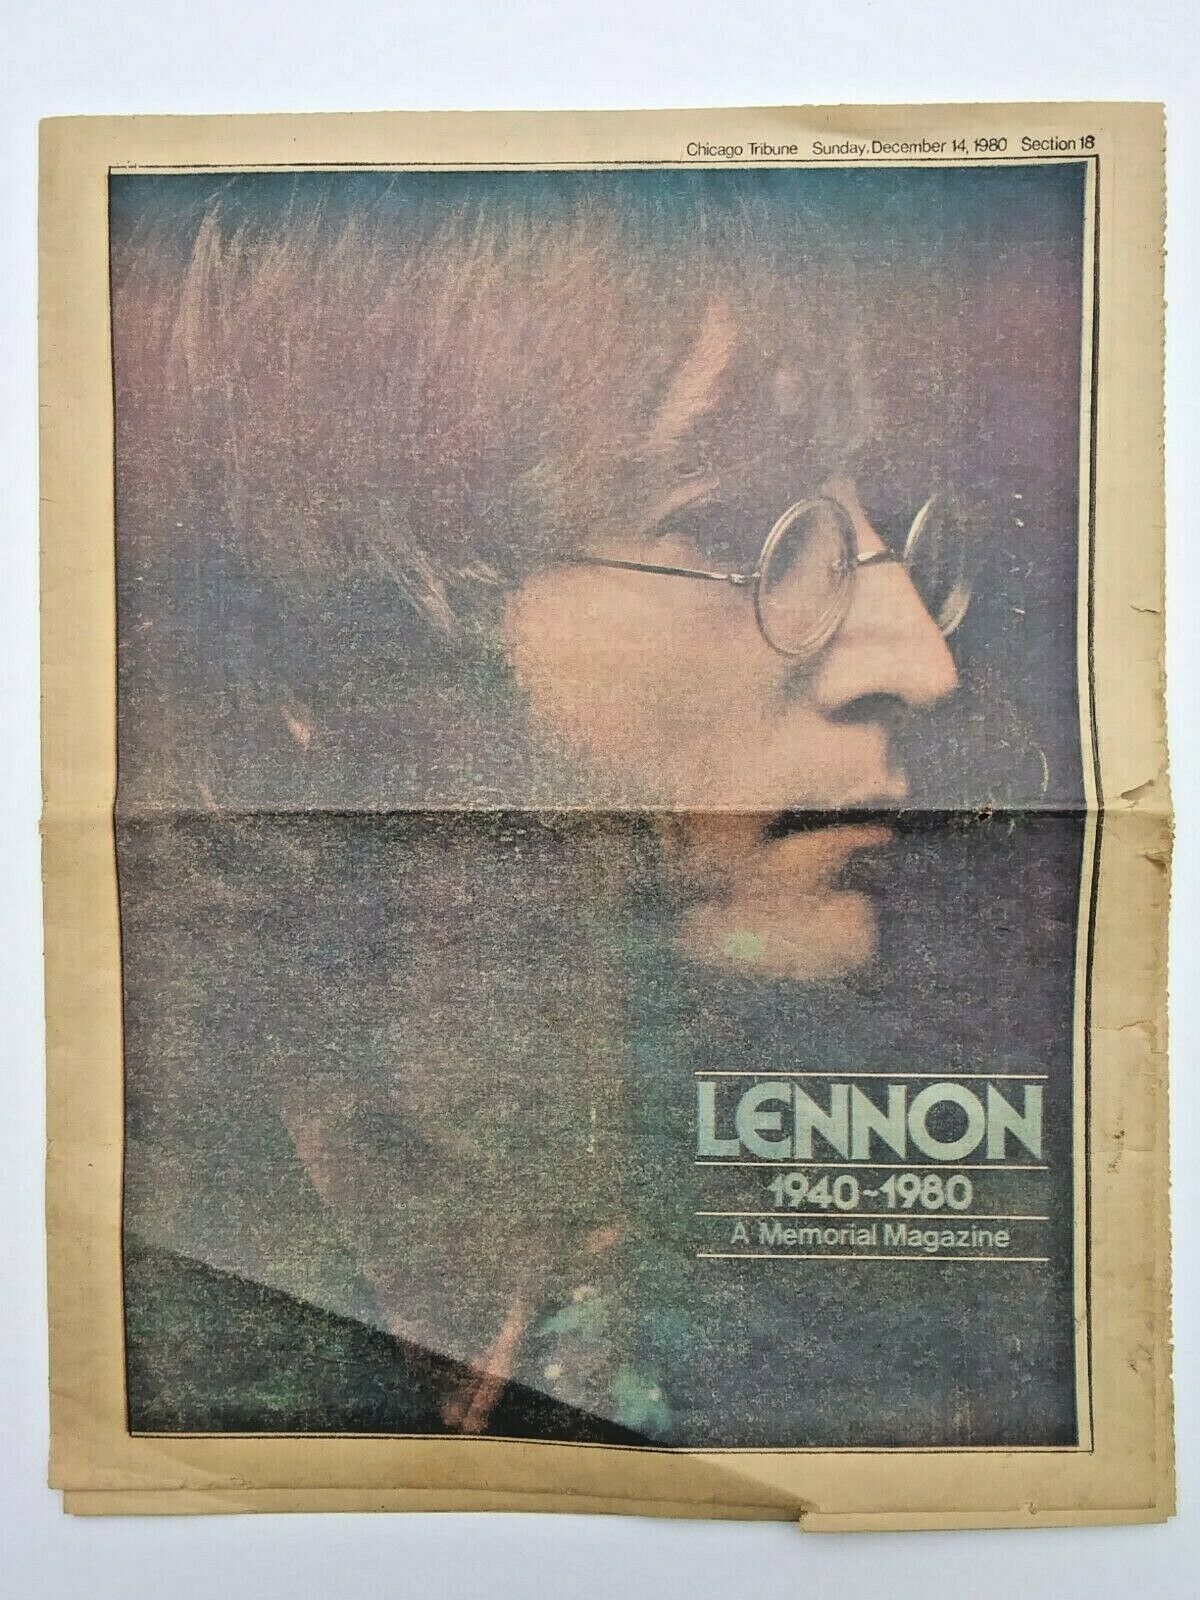 Beatles John Lennon Assassination Death Newspaper Chicago Tribune Dec 14,1980